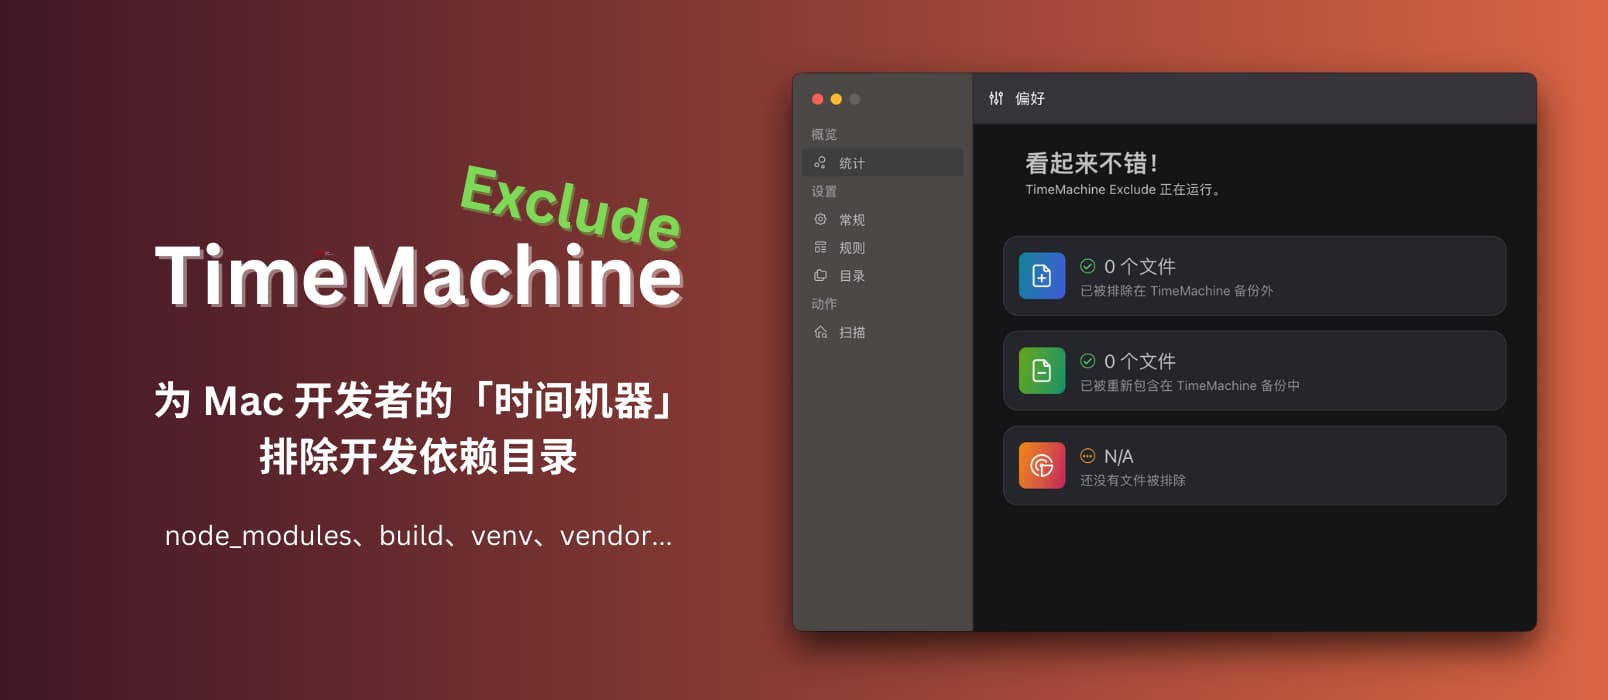 TimeMachine Exclude - Mac 开发者必备：备份时，为时间机器排除依赖目录（node_modules、build、venv、vendor 等）